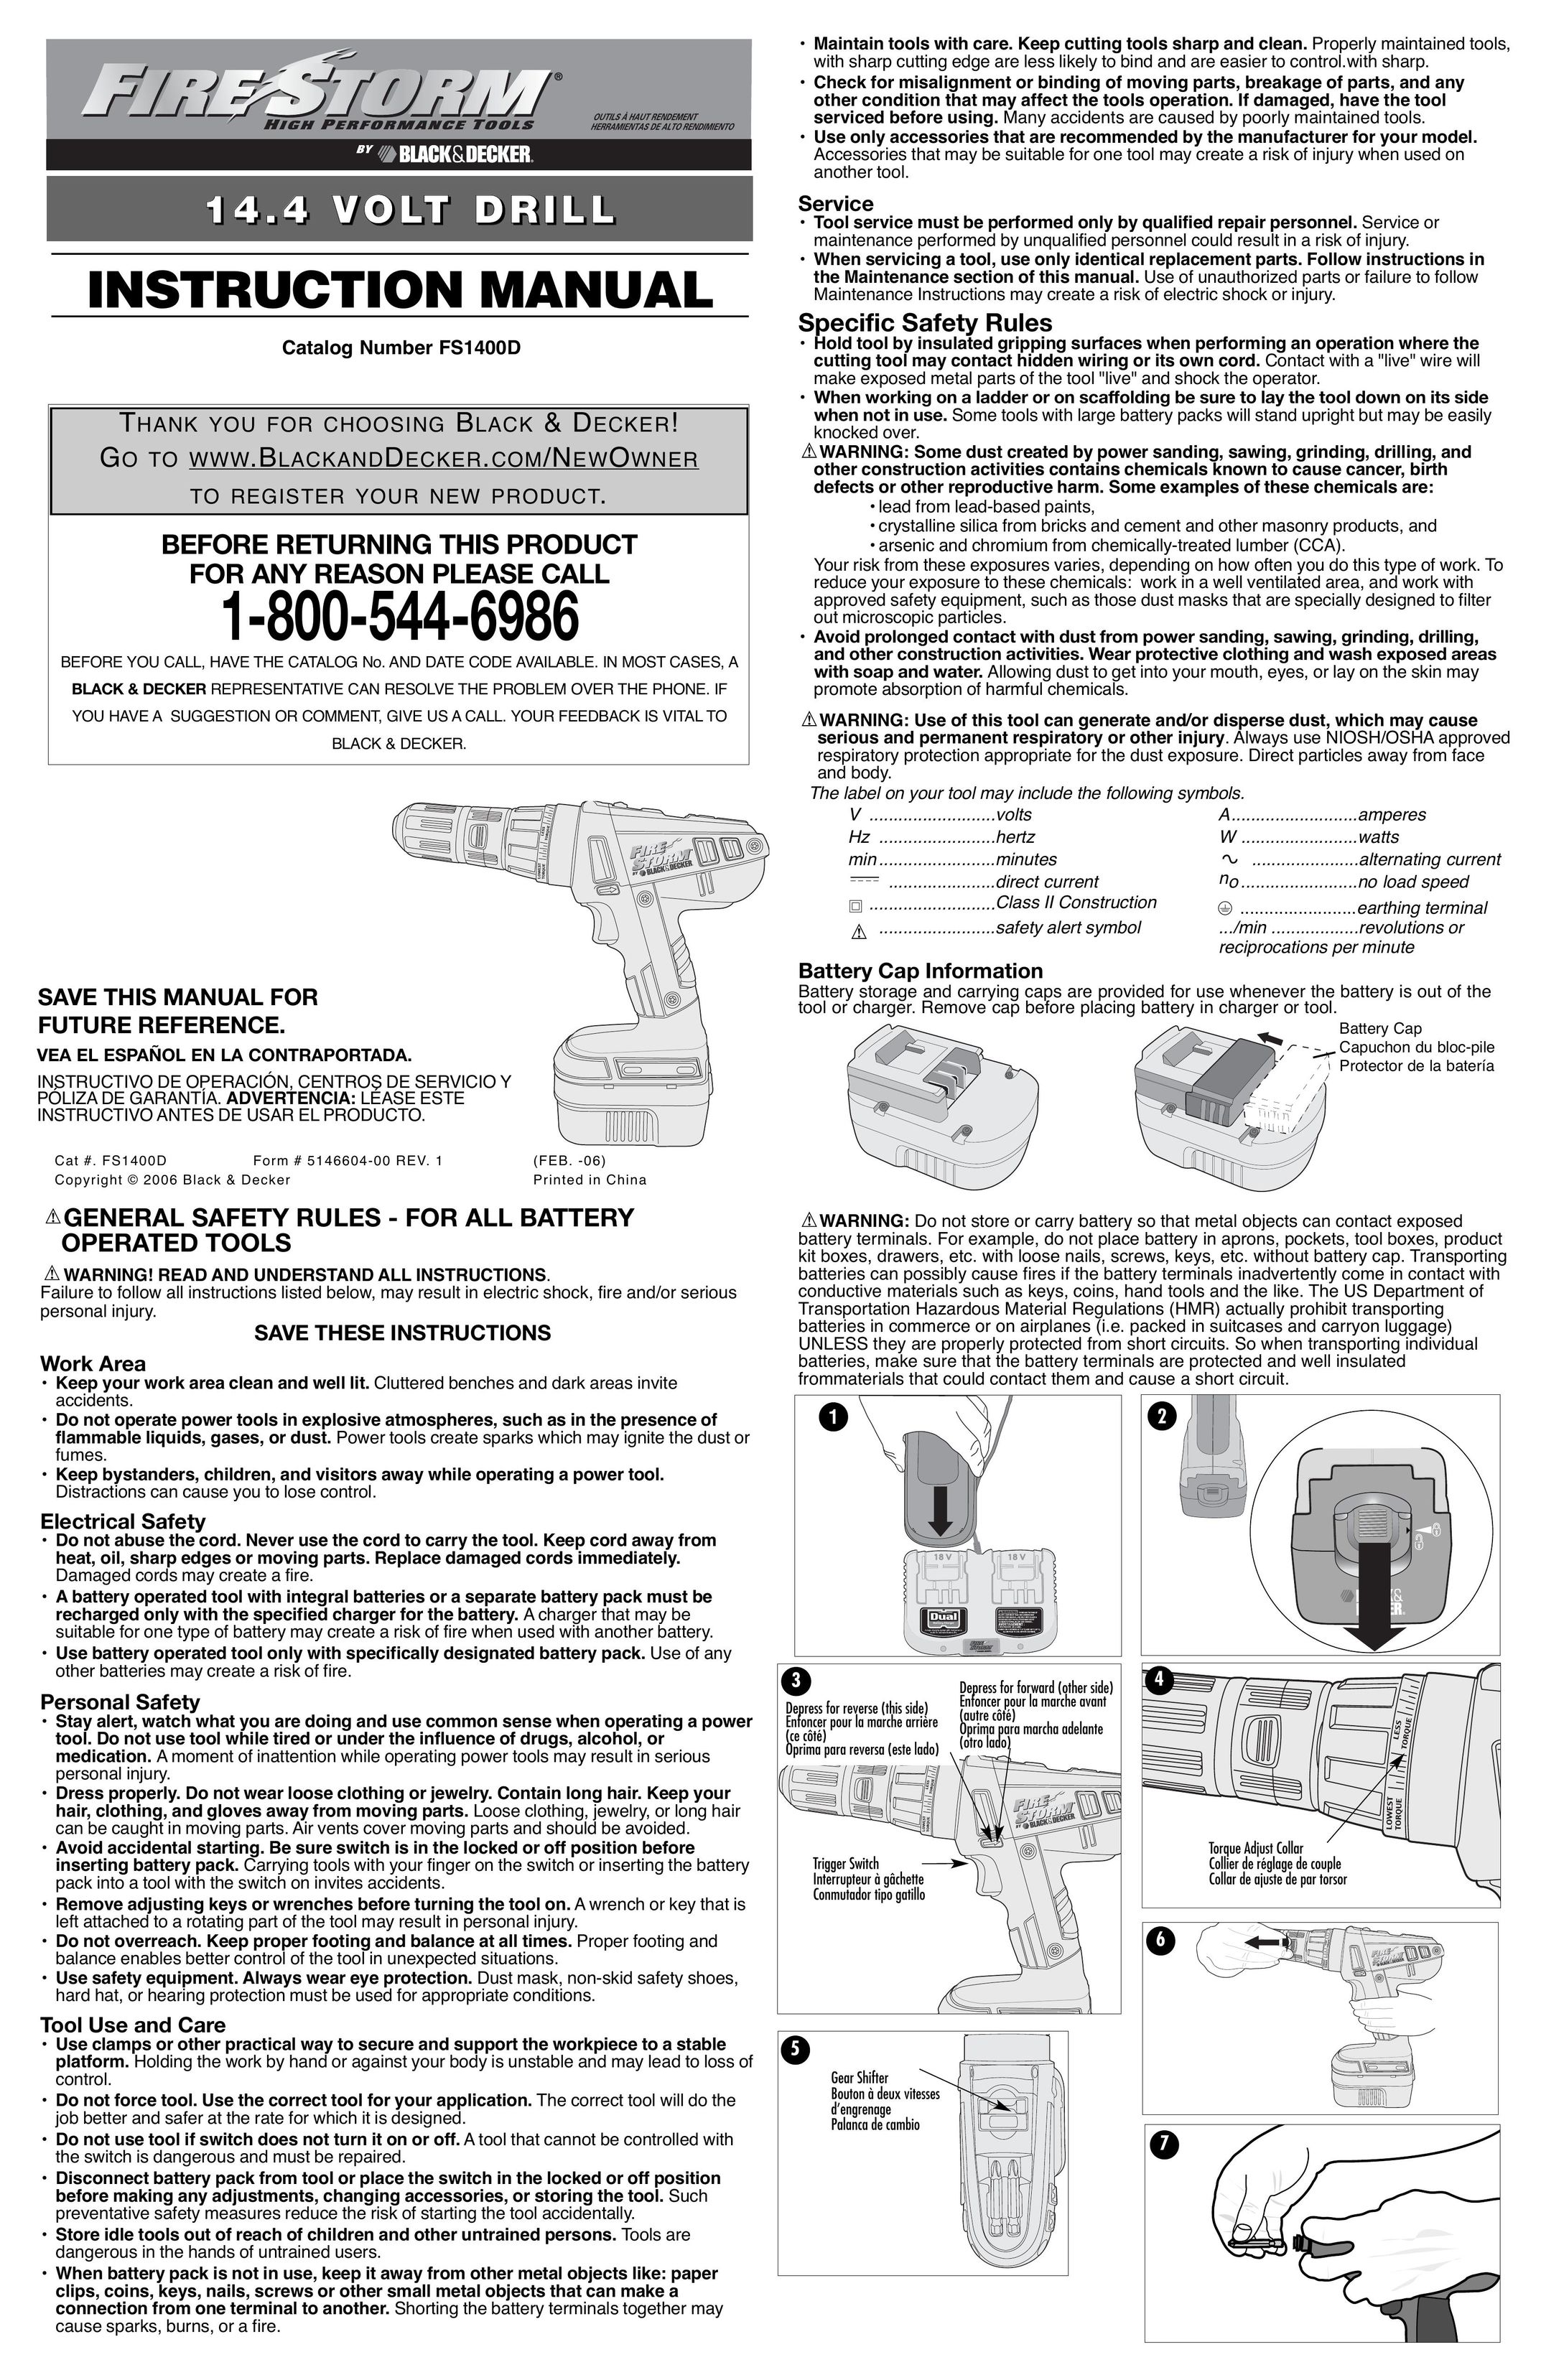 Black & Decker 5146604-00 Drill User Manual